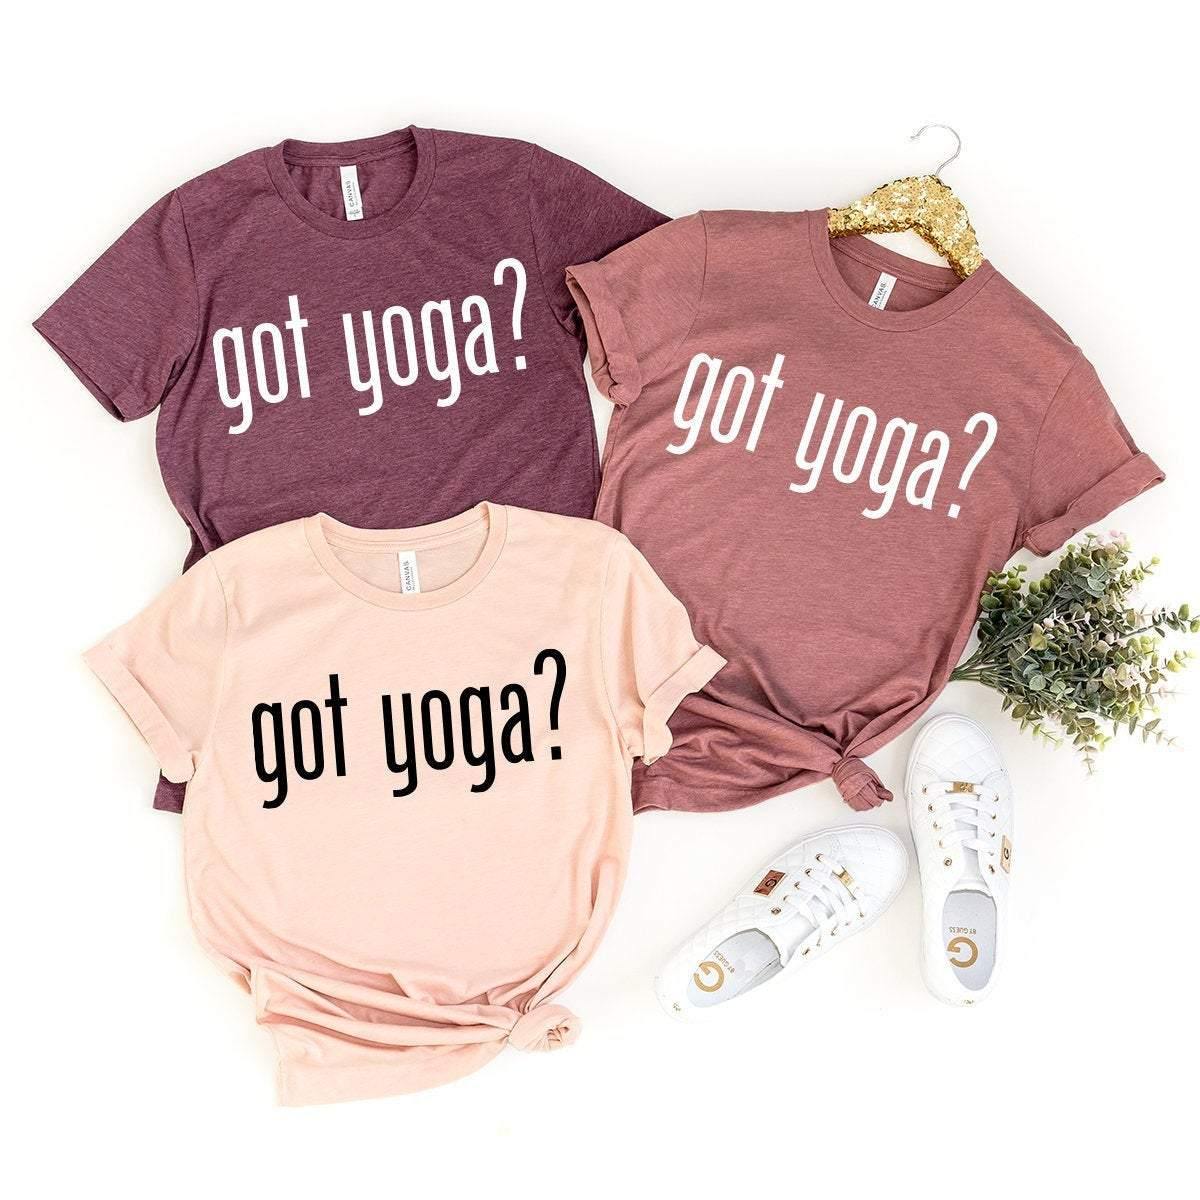 Yoga Shirt, Meditation Shirt, Yoga T-Shirt, Yoga Lover Tee, Got Yoga? Shirt, Inspirational Shirt, Yoga Tee, Yoga Shirt For Women, Yoga Gift - Fastdeliverytees.com